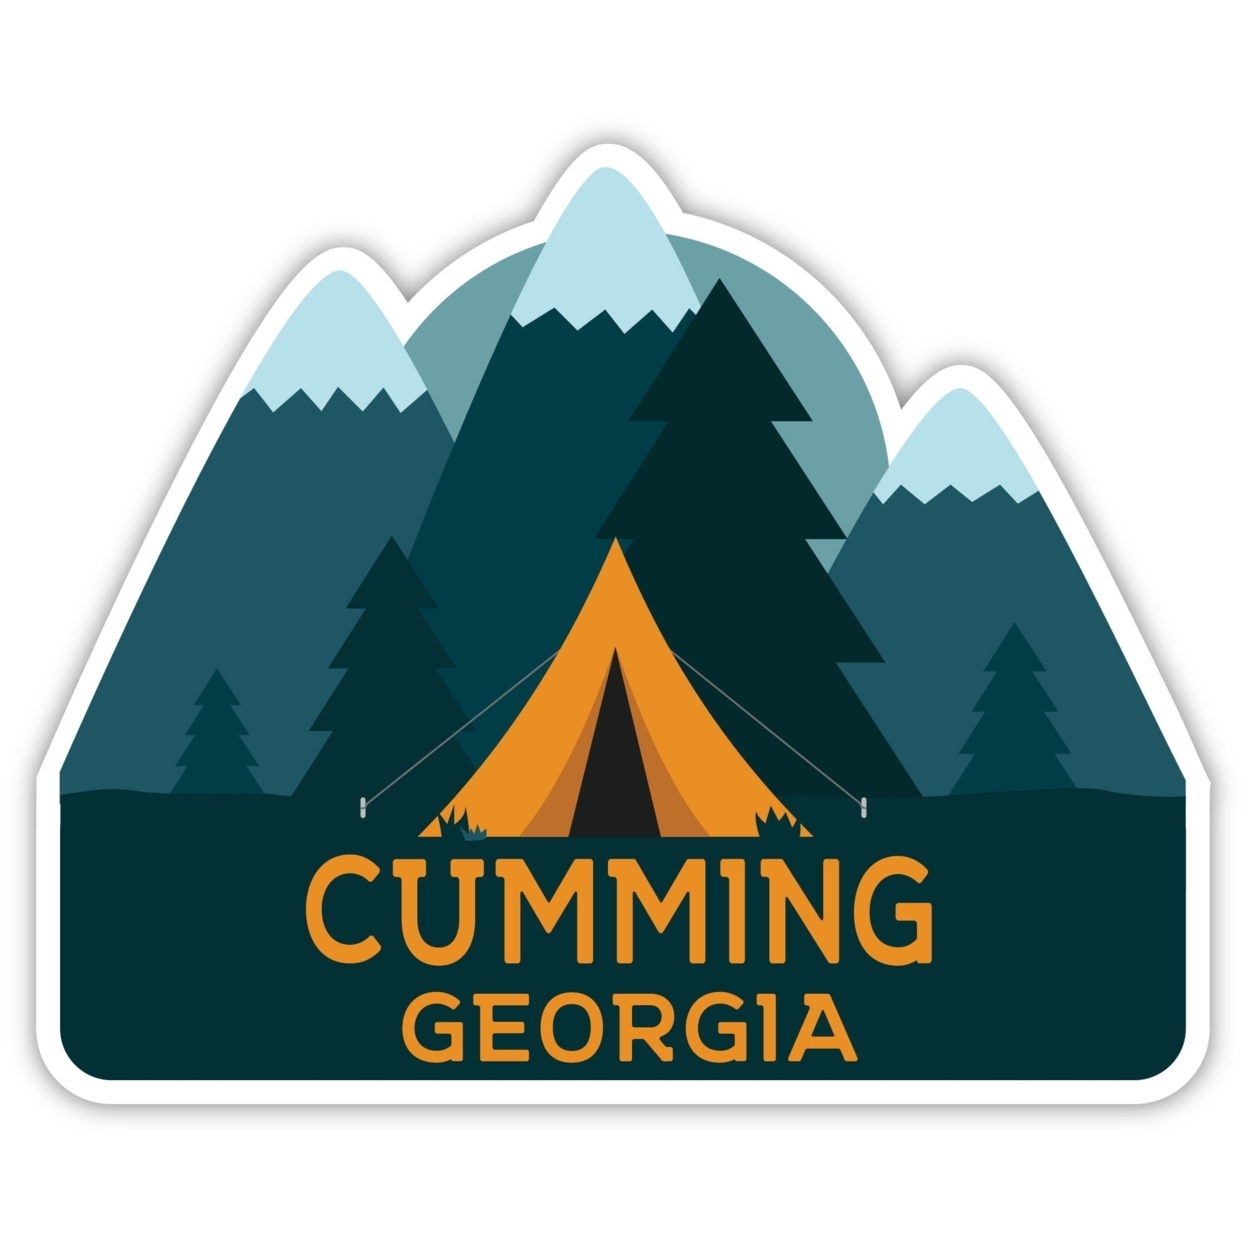 Cumming Georgia Souvenir Decorative Stickers (Choose Theme And Size) - 4-Pack, 2-Inch, Tent